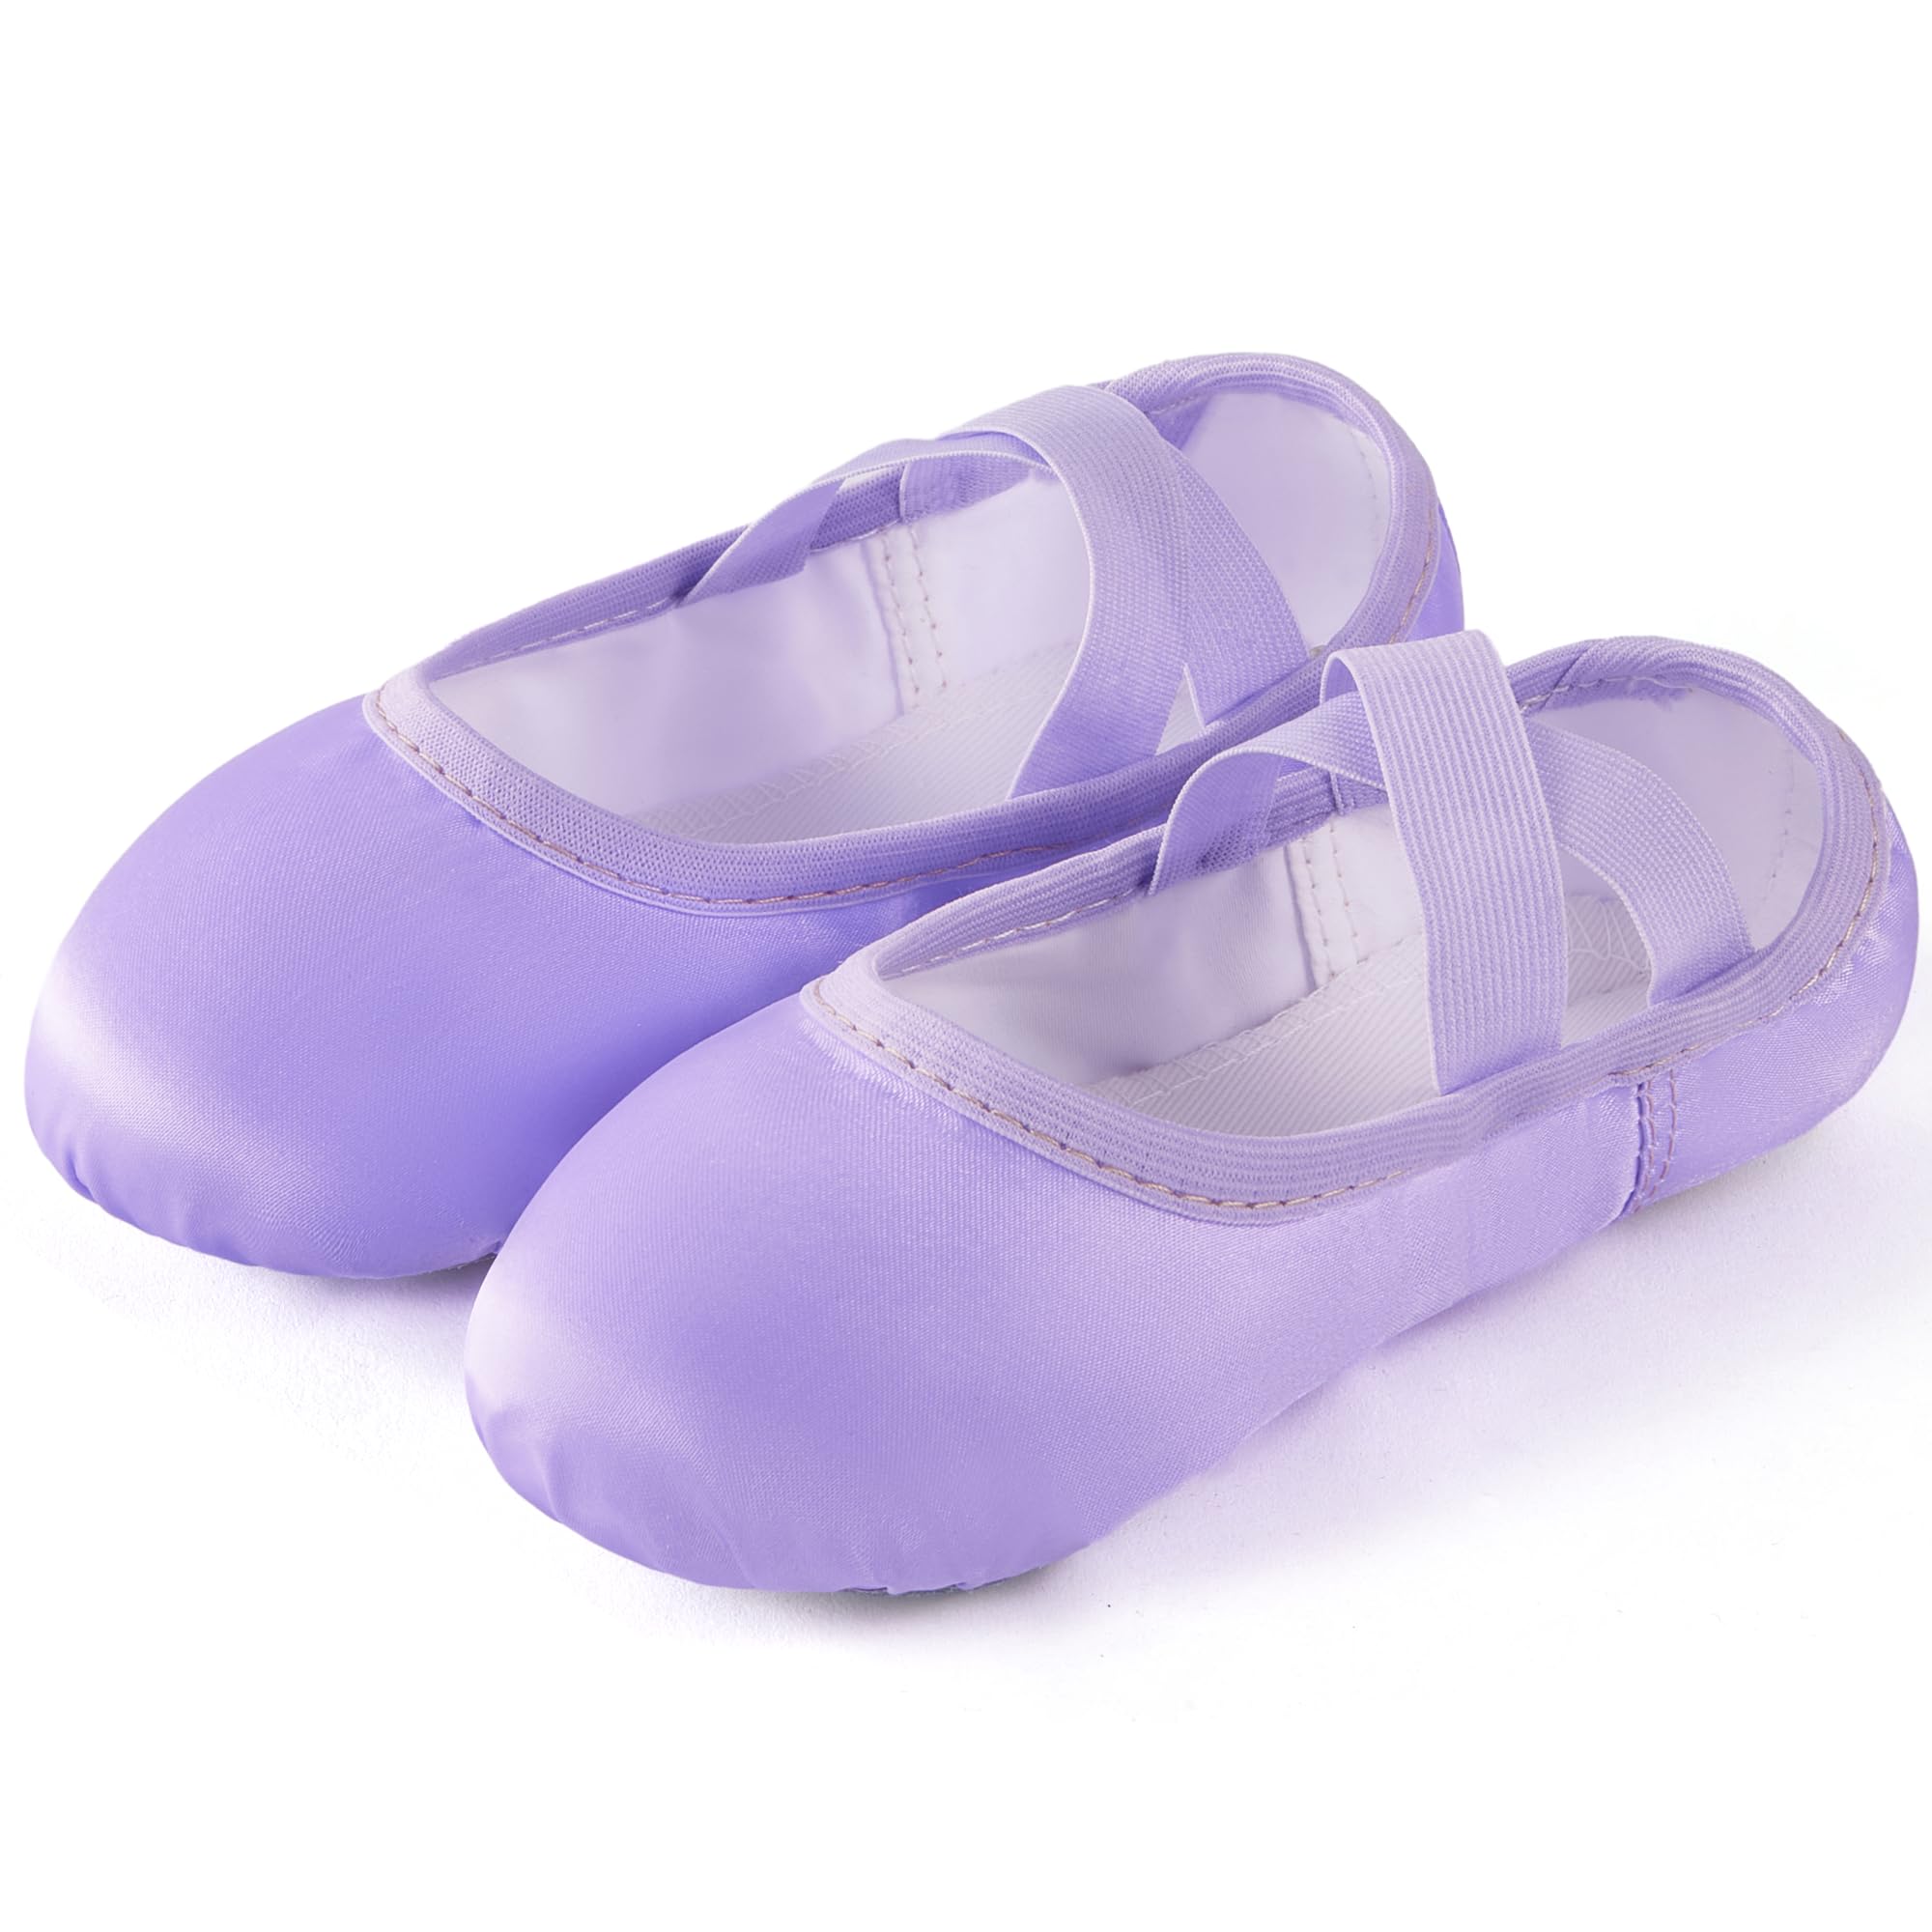 TRIPLE DEER Ballet Shoes for Girls, Satin Dance Practice Slippers Split Soft Leather Flat Sole Yoga Gymnastics Shoes (Toddler/Little/Big Kid)